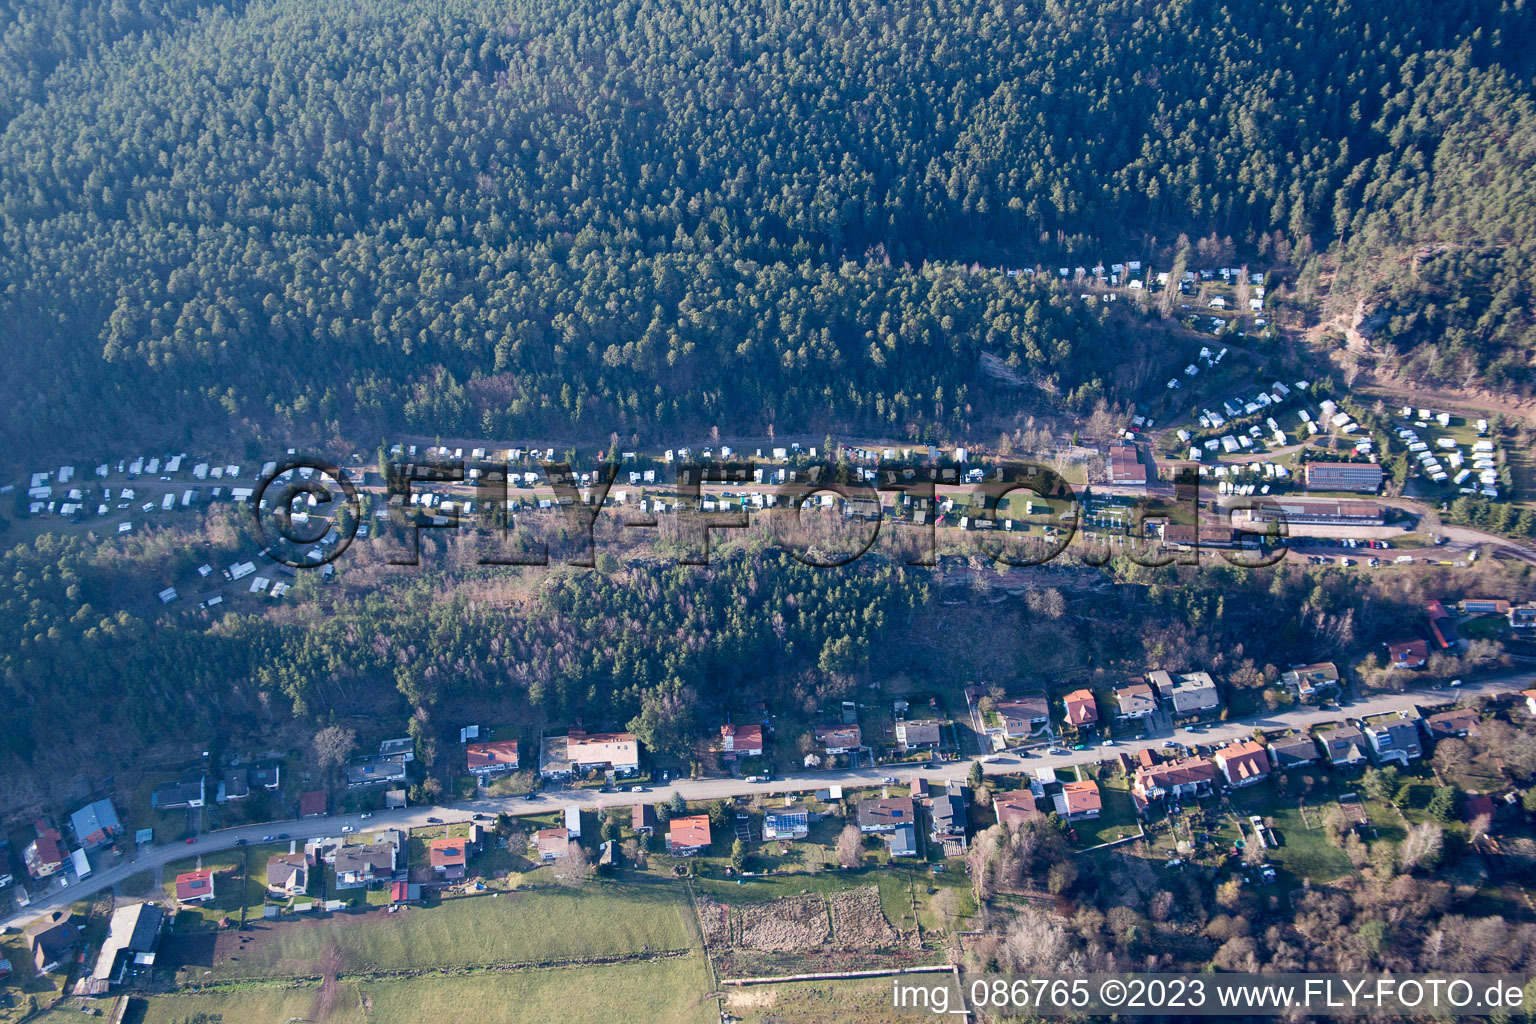 Aerial view of Büttelwoog campsite in Dahn in the state Rhineland-Palatinate, Germany